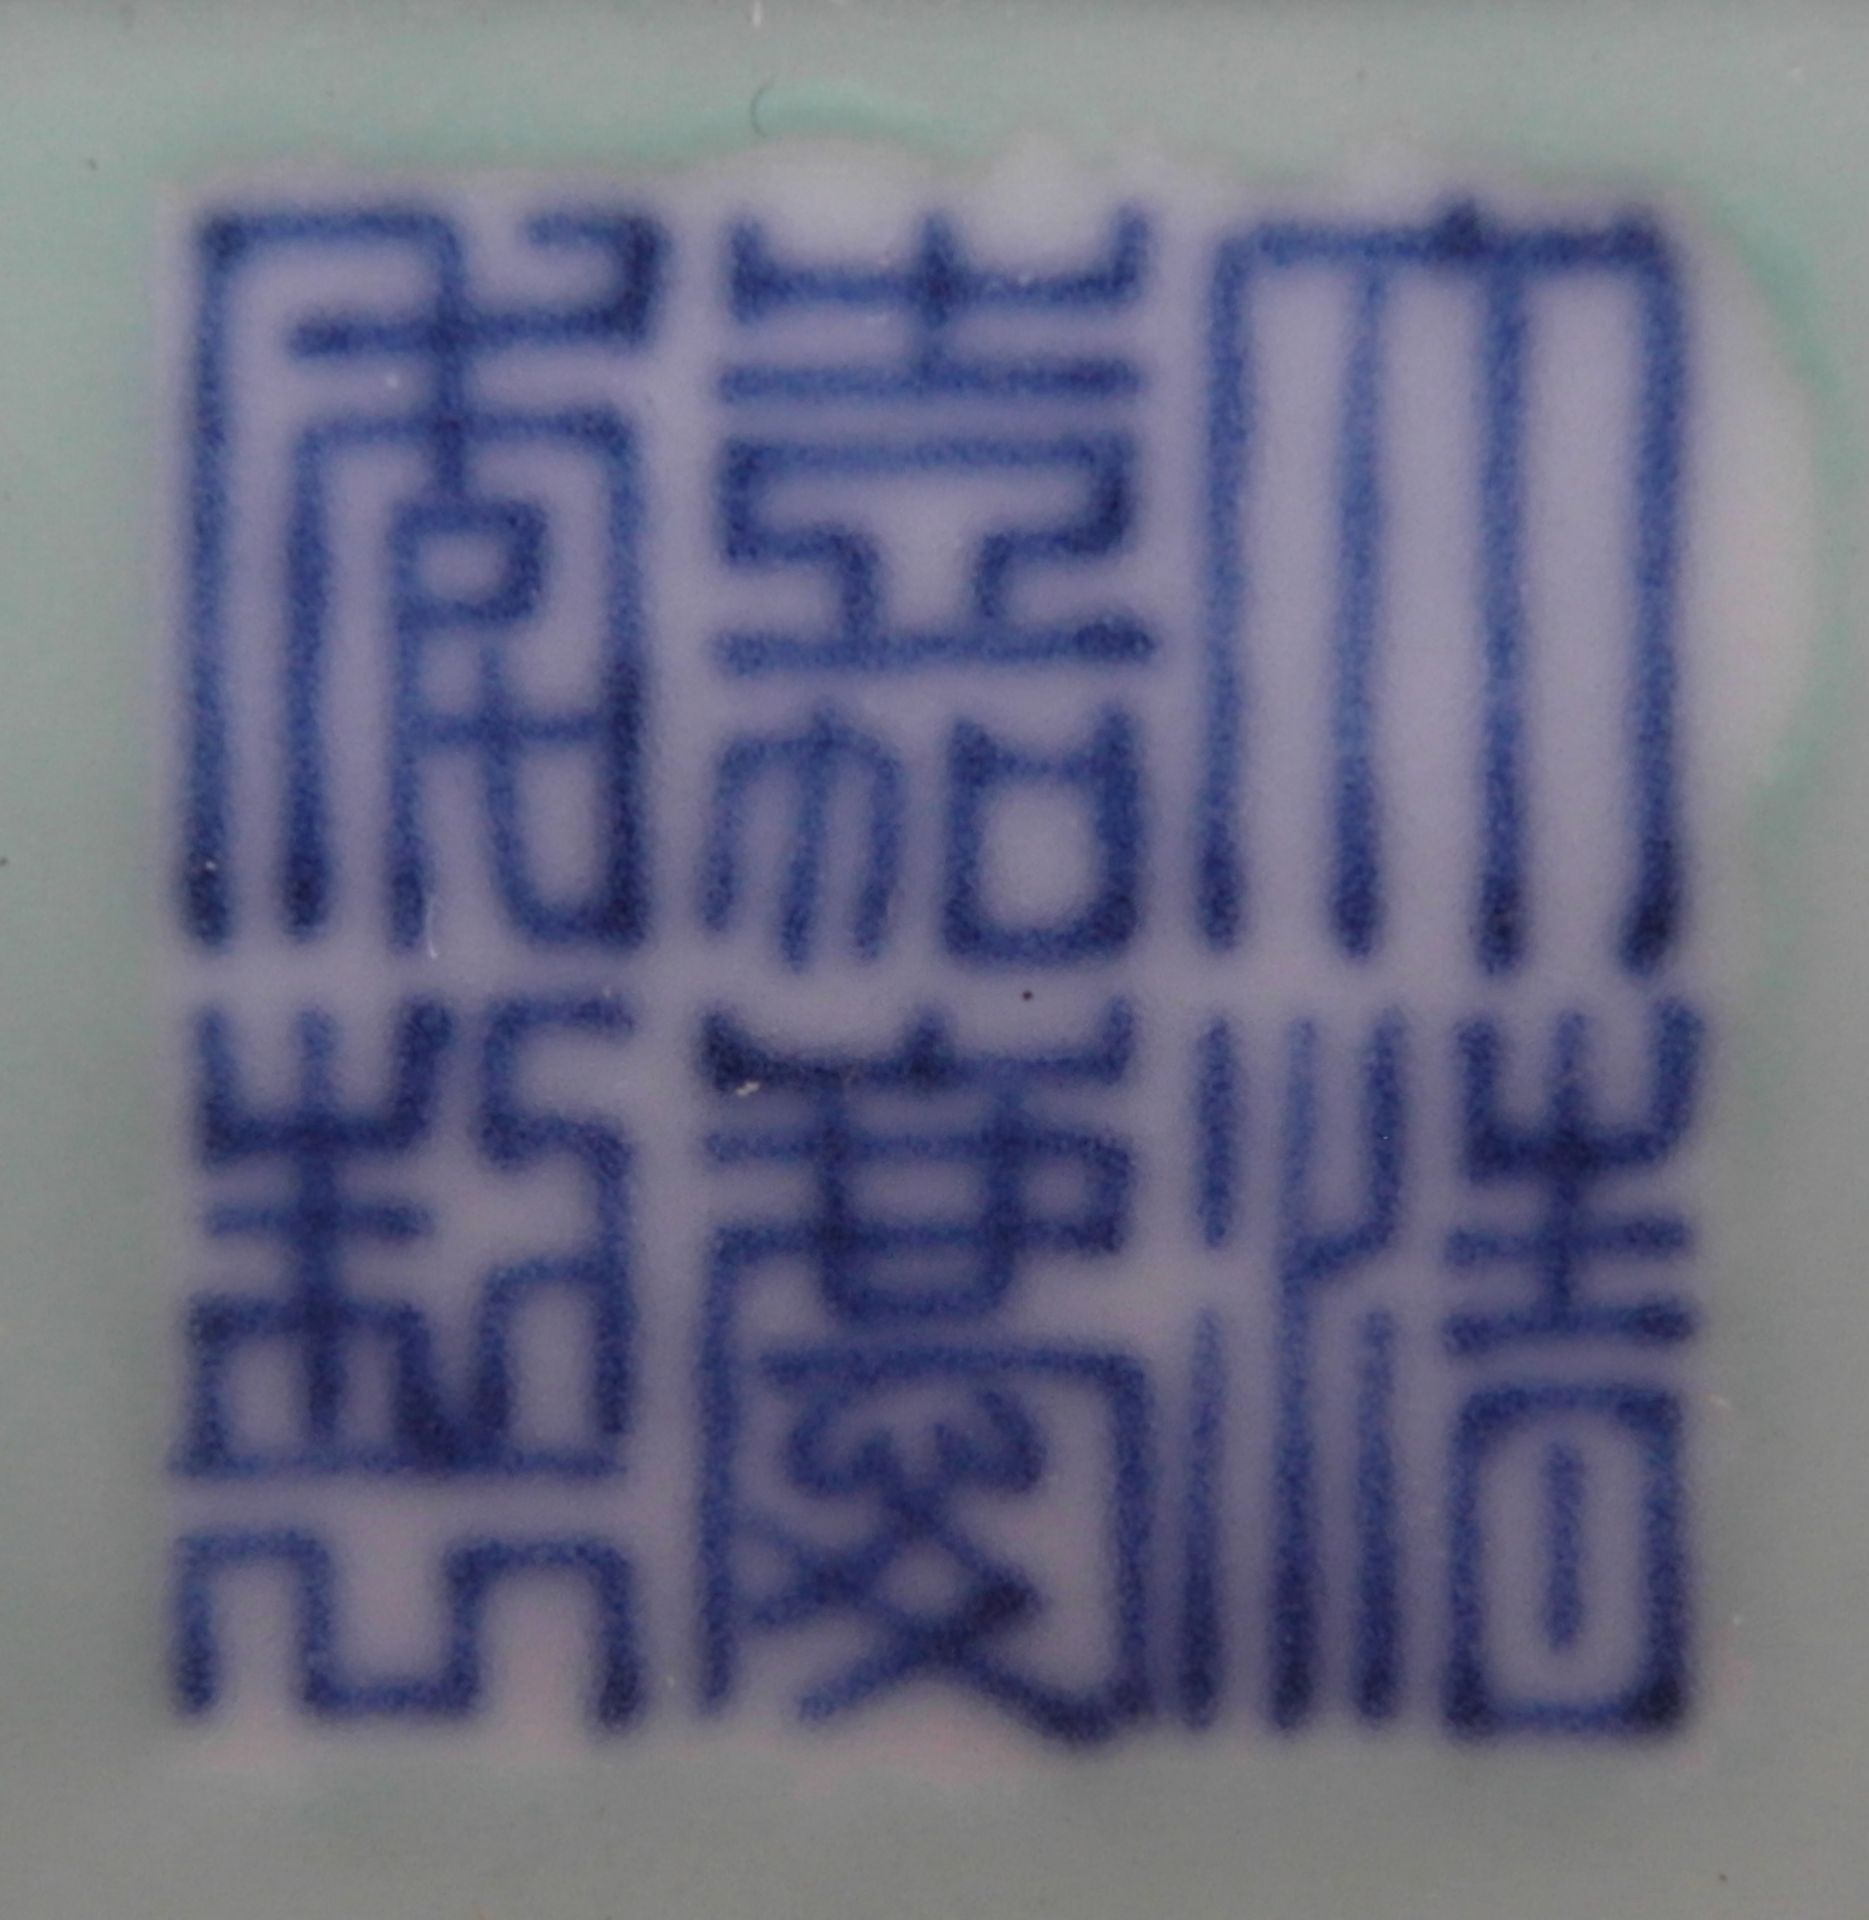 BLÜTENFÖRMIGE DECKELDOSE MIT LIU HAI. China. Qing-Dynastie. Jiaqing-Periode (1796-1820). - Image 2 of 2